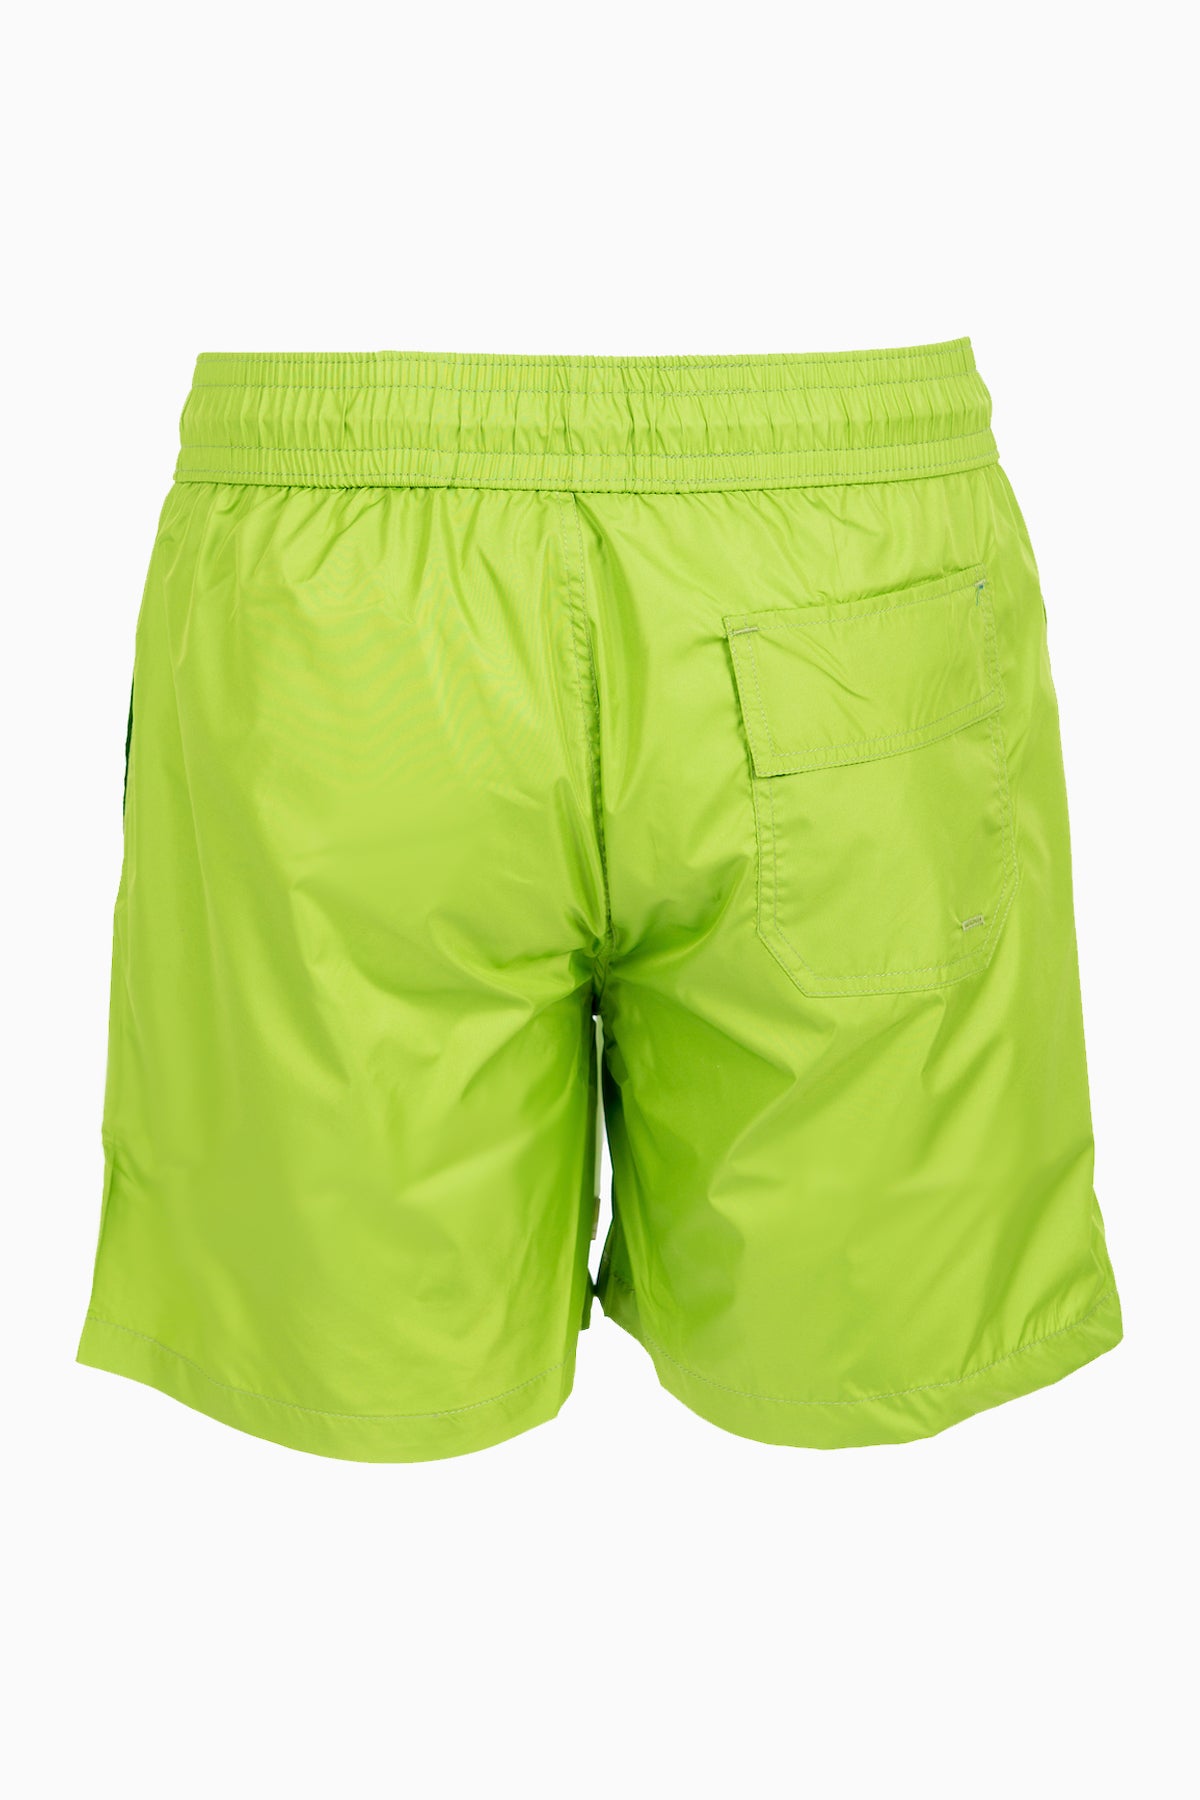 Men's Shorts - Lime Green